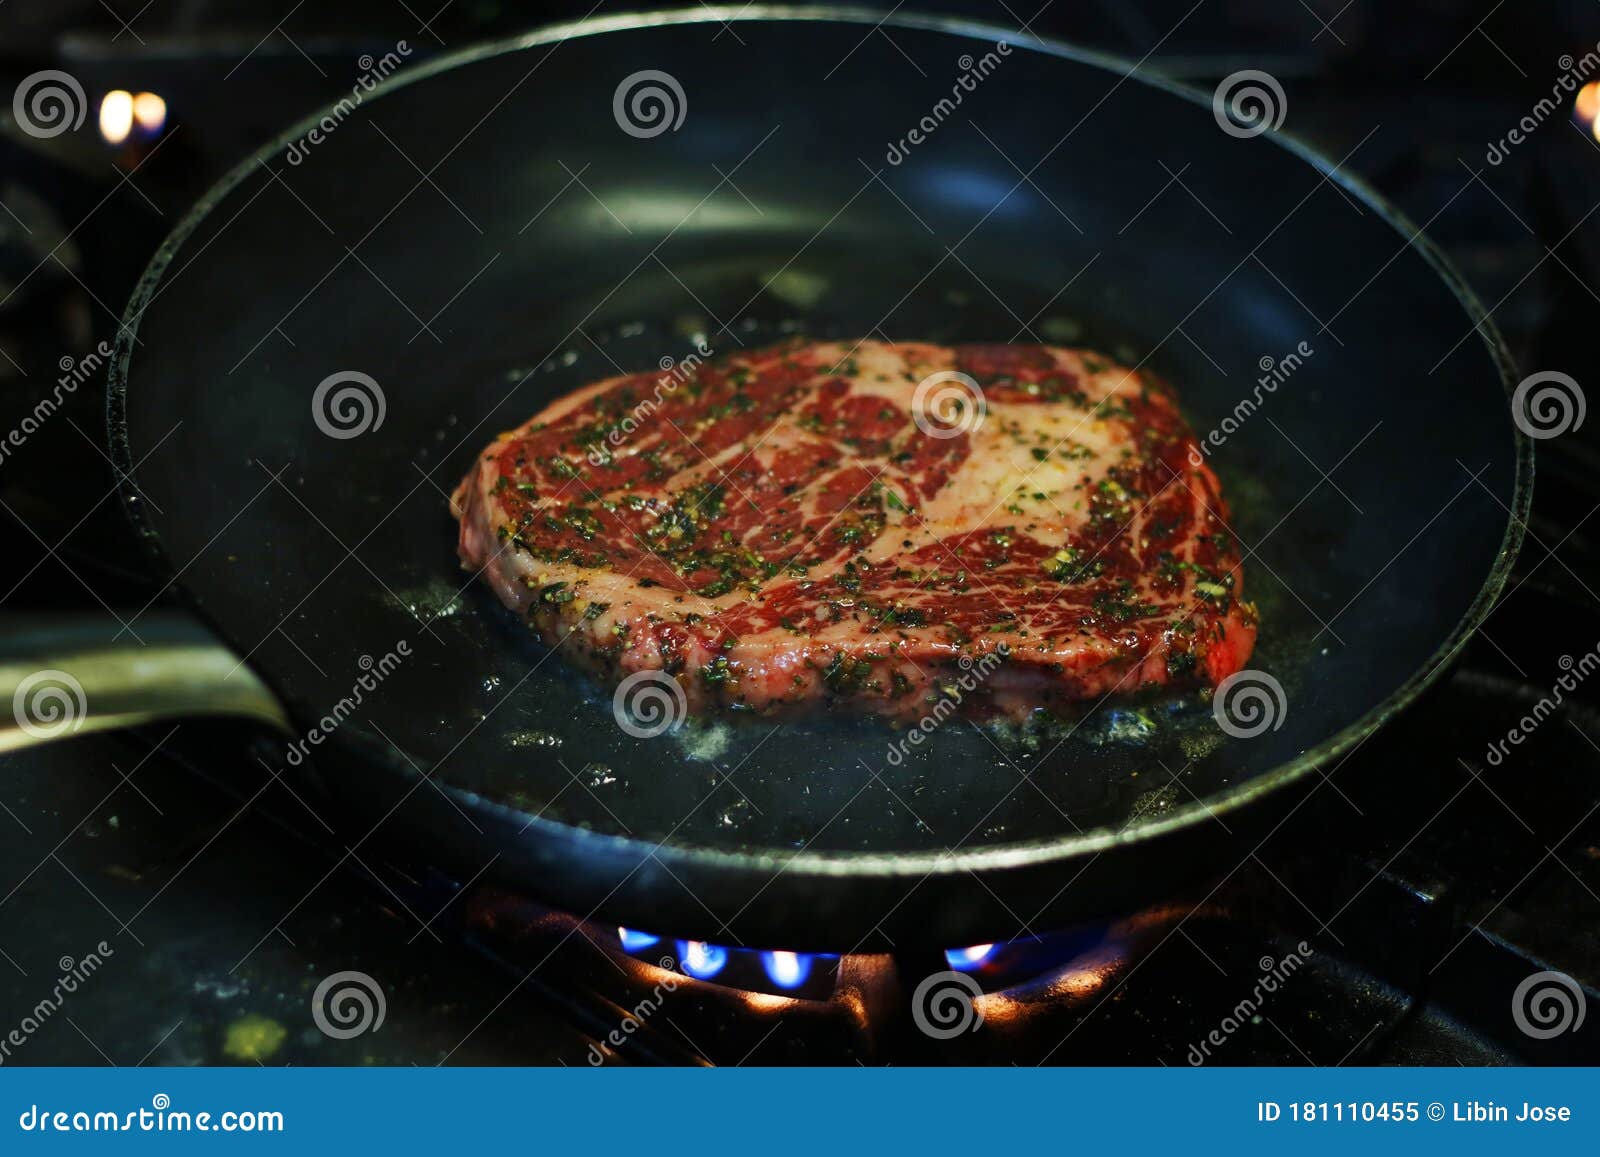 https://thumbs.dreamstime.com/z/beef-ribeye-steak-cooking-hot-non-stick-pan-181110455.jpg